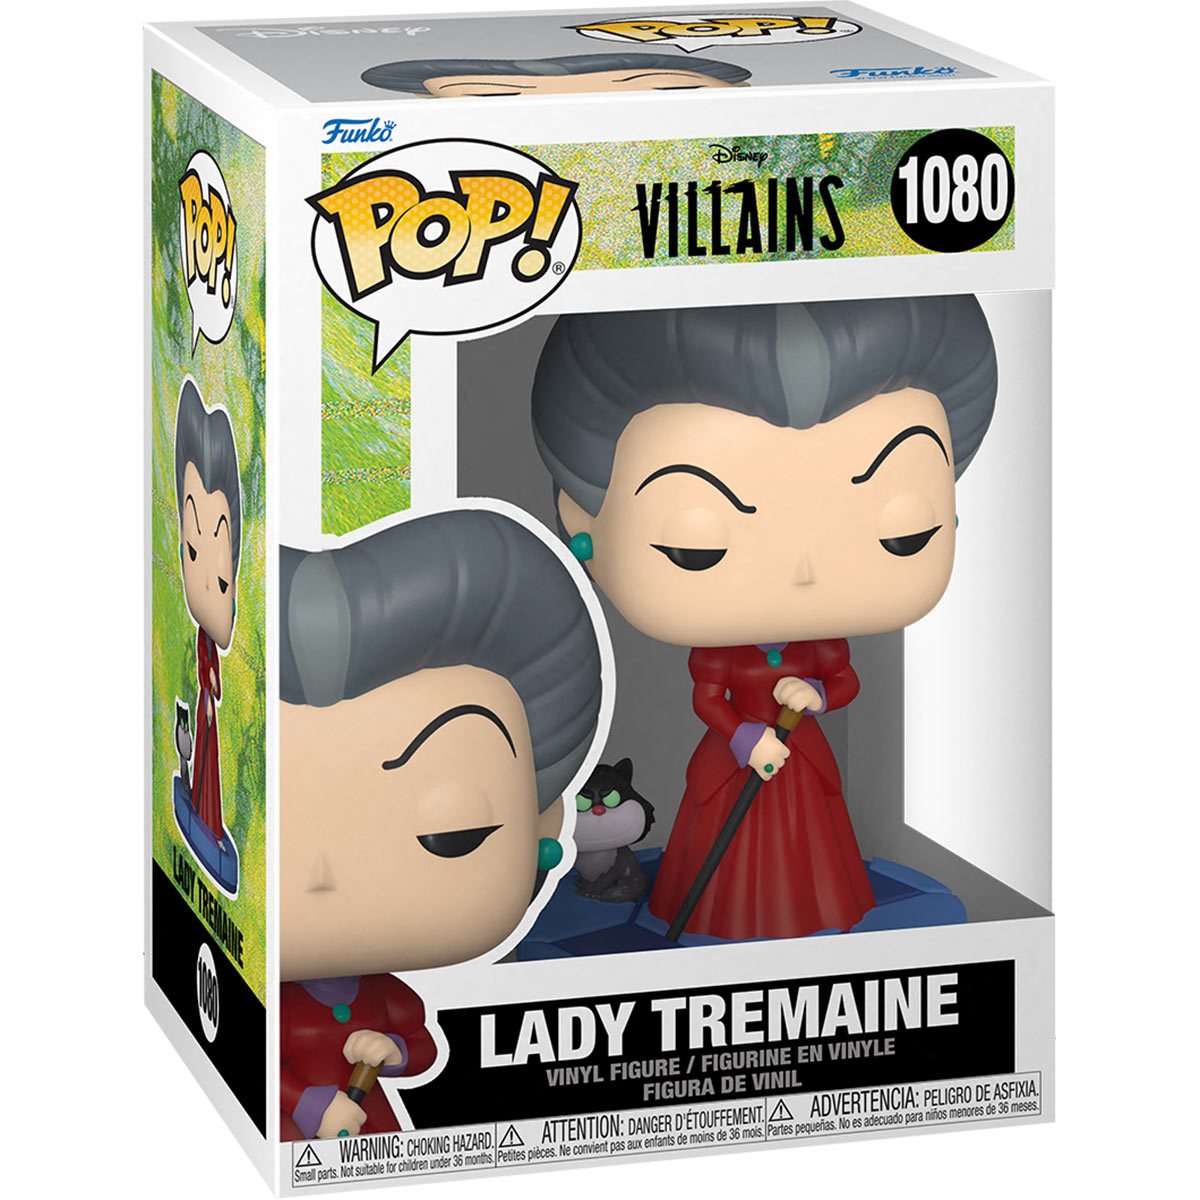 Disney Villains - Lady Tremaine Pop! Vinyl Figure (1080)